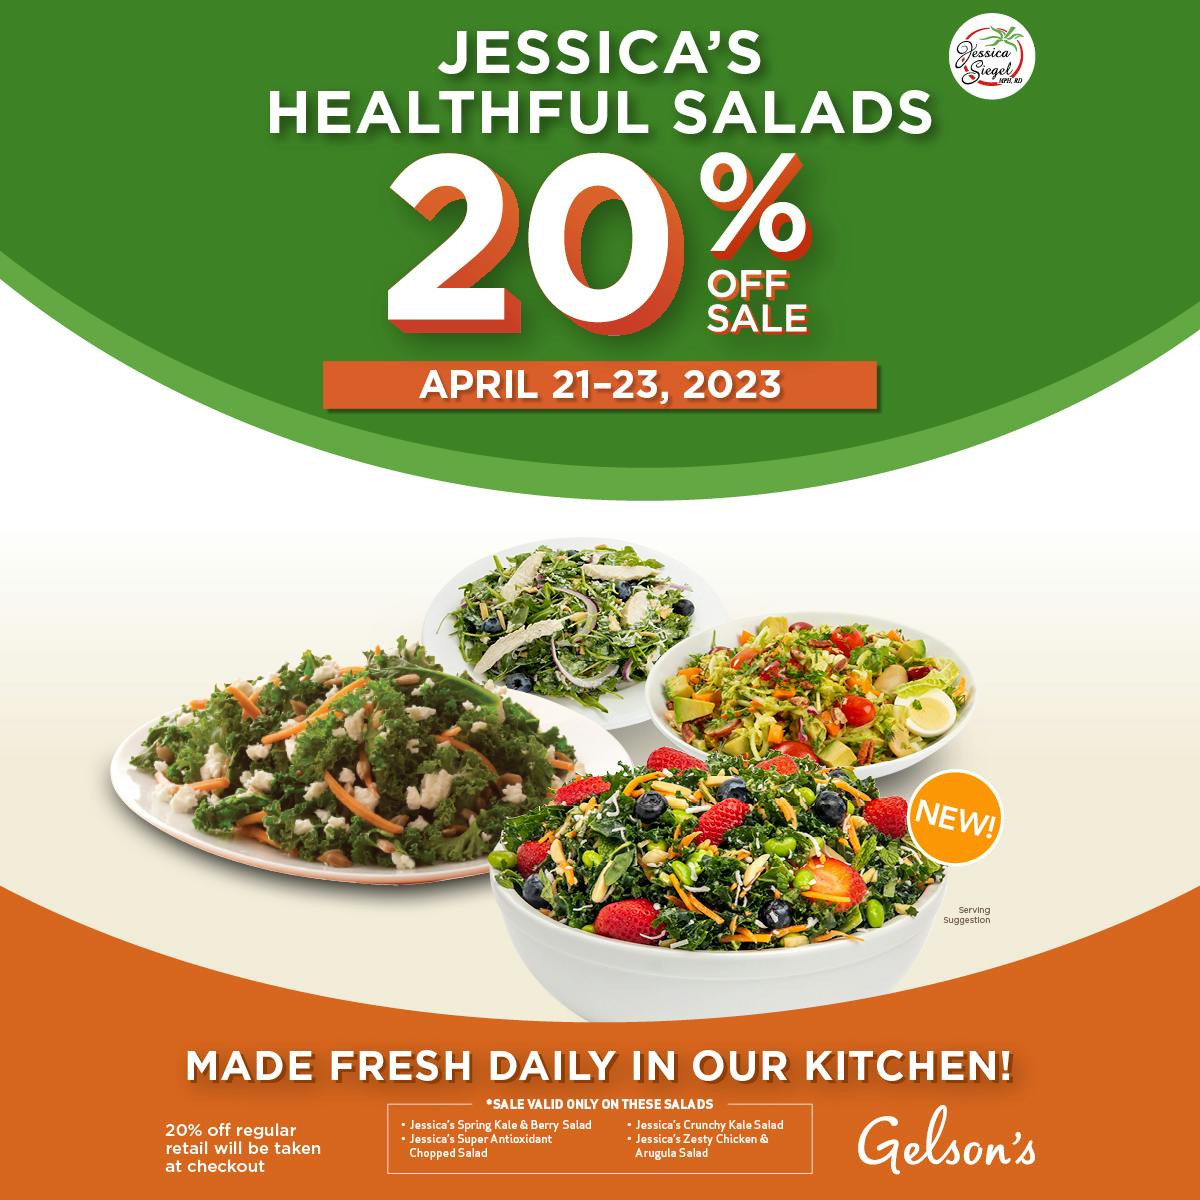 Jessica's Salads Jessica's Spring Kale & Berry Salad, Jessica's Super Antioxidant Chopped Salad, Jessica's Crunchy Kale Salad, and Jessica's Zesty Chicken & Arugula Salad. On Sale April 21-23